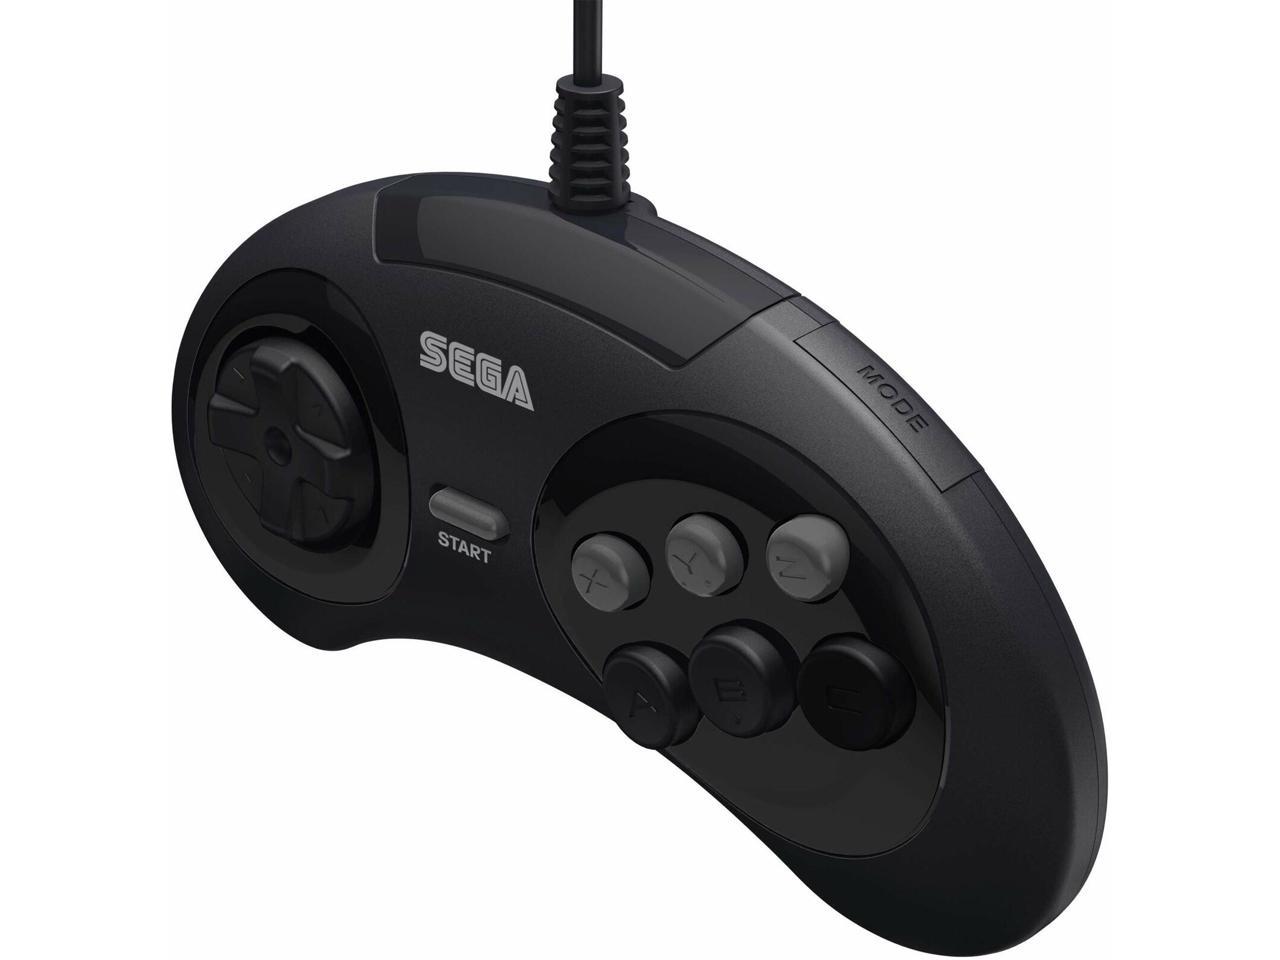 Retro Bit Official Sega Genesis Controller 6 Button Arcade Pad Clear